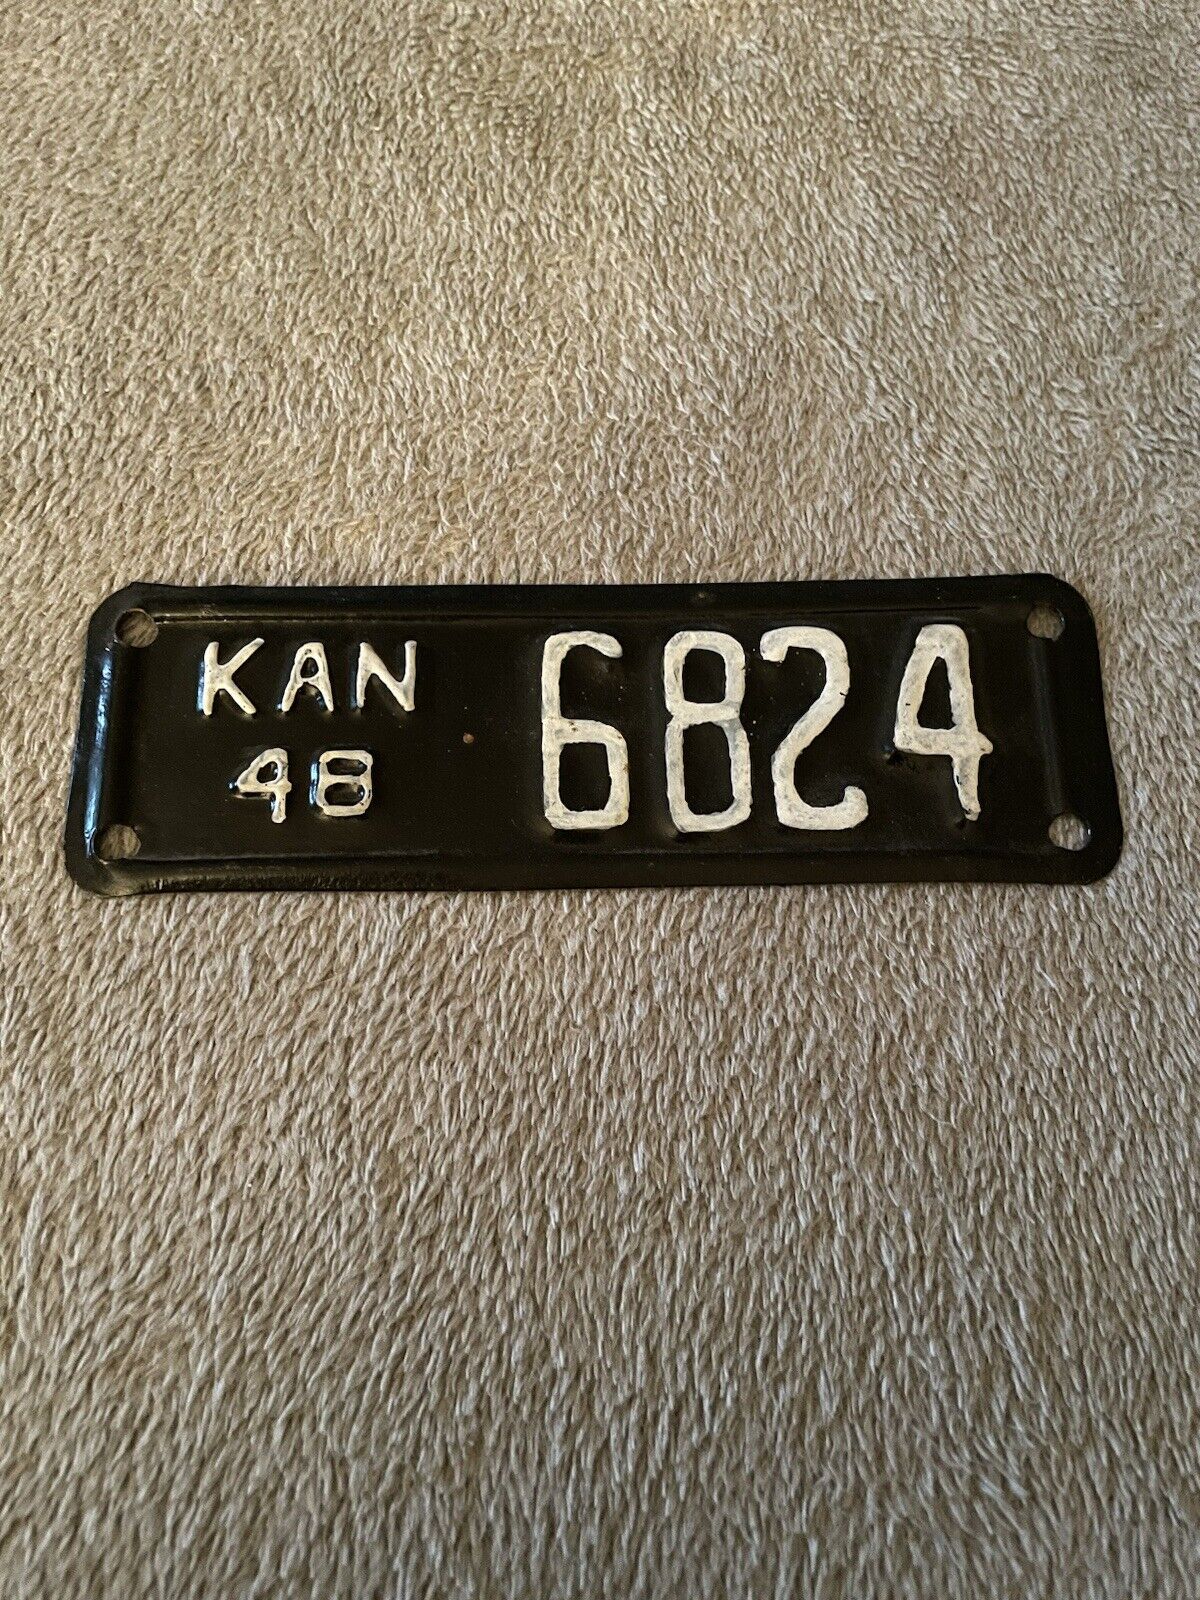 Original 1948 Kansas Motorcycle License Plate - 6824 - KS plates